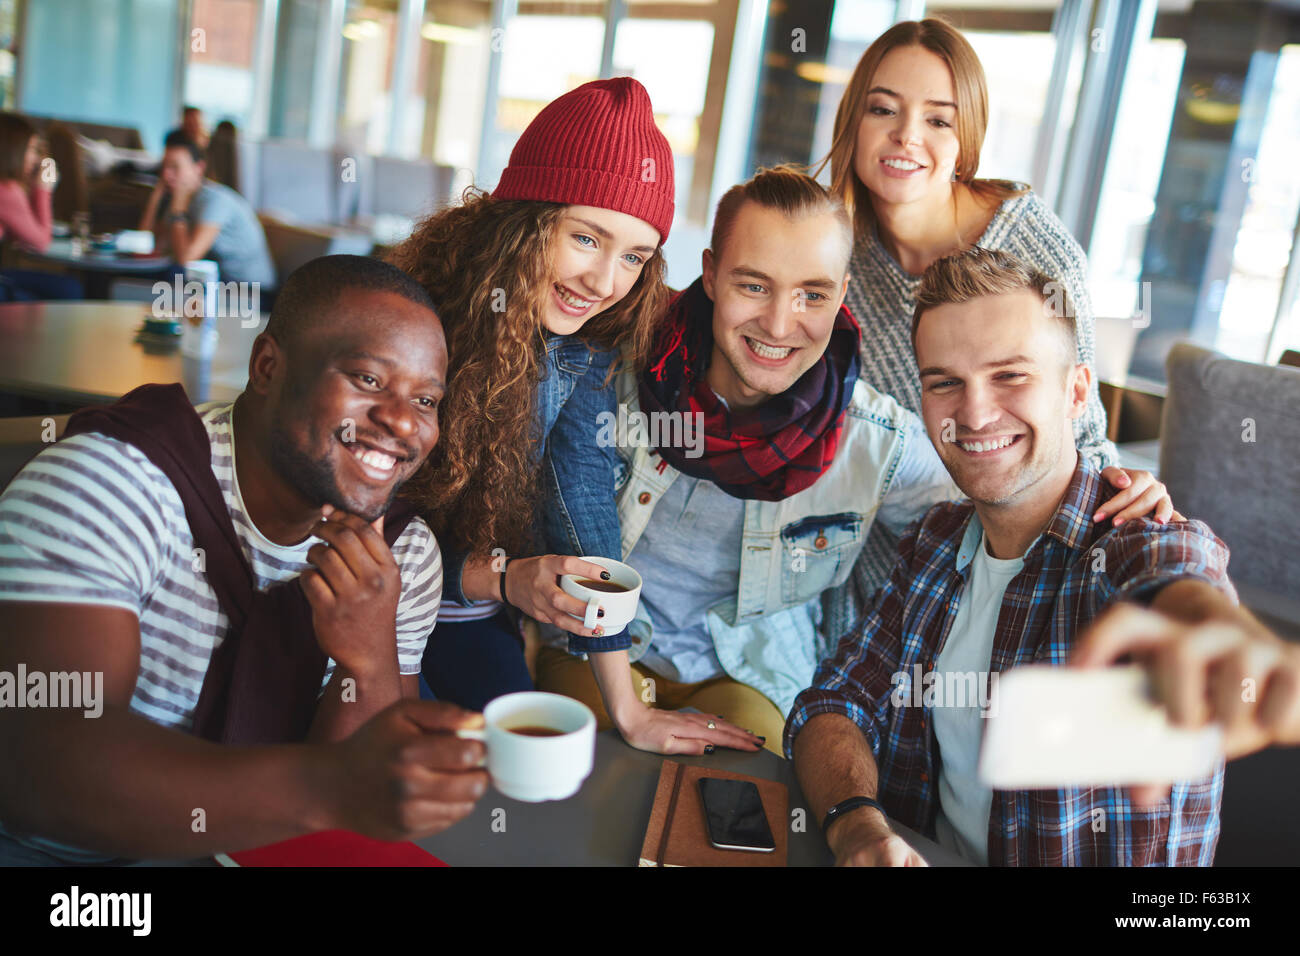 Friendly teenagers making selfie in cafe Stock Photo